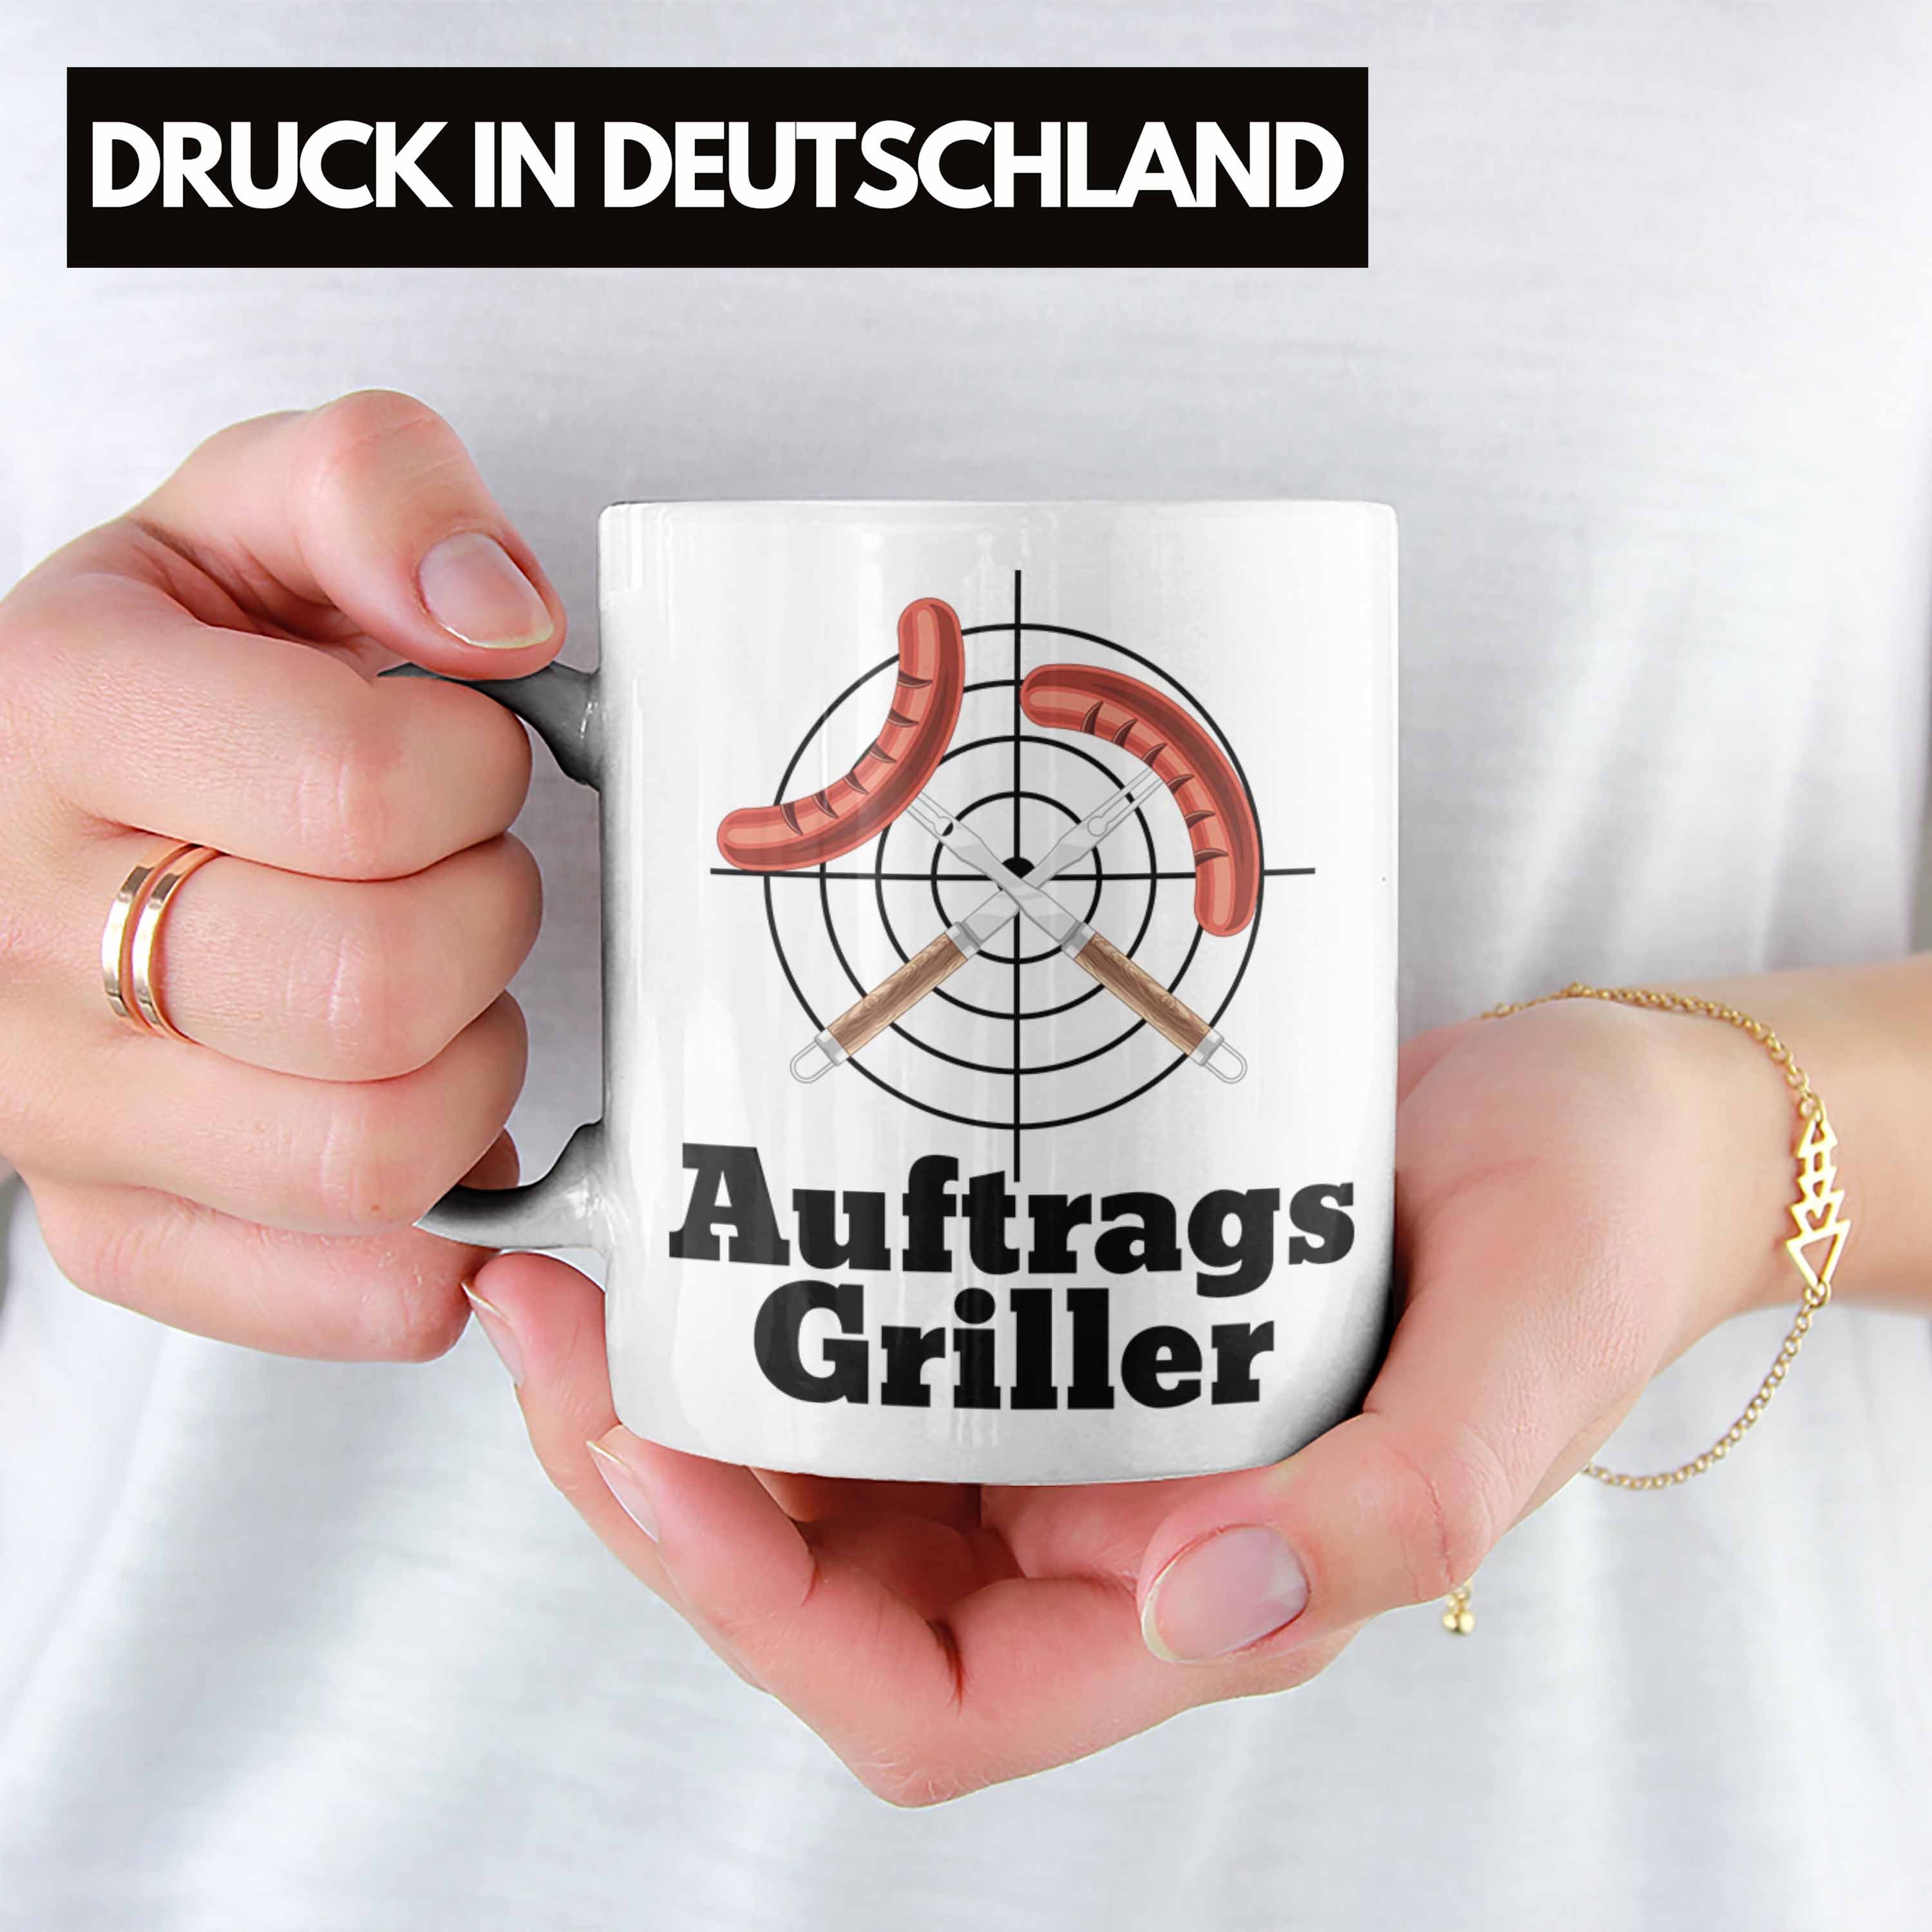 Trendation Tasse Gril Grillmeister Kaffee-Becher Weiss Auftrags-Griller Geschenk Männer Tasse